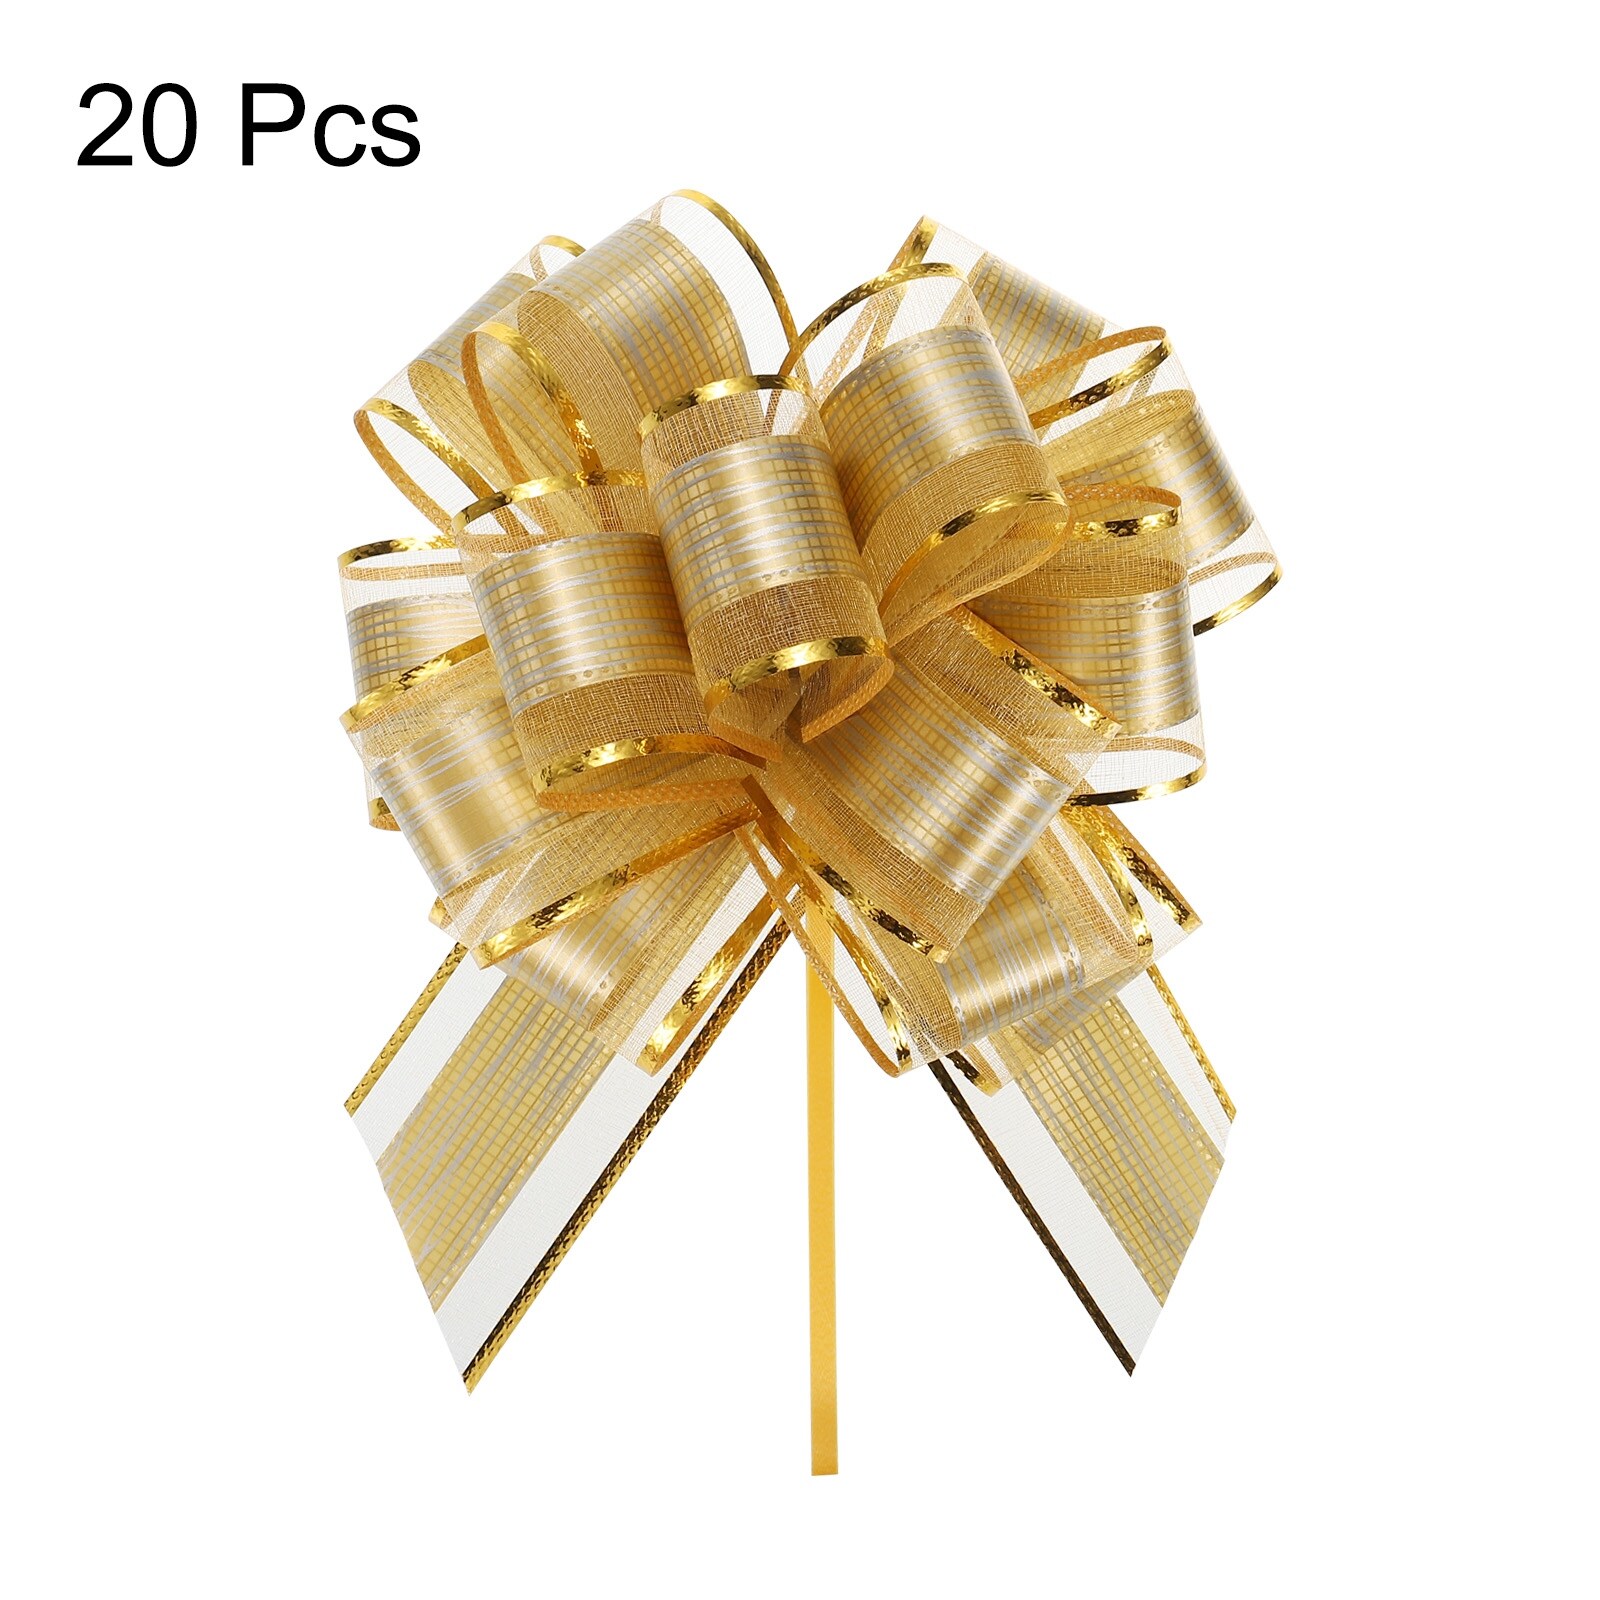 10pcs 7 Inch Large Pull Bow Gift Wrapping Bows Ribbon Organza